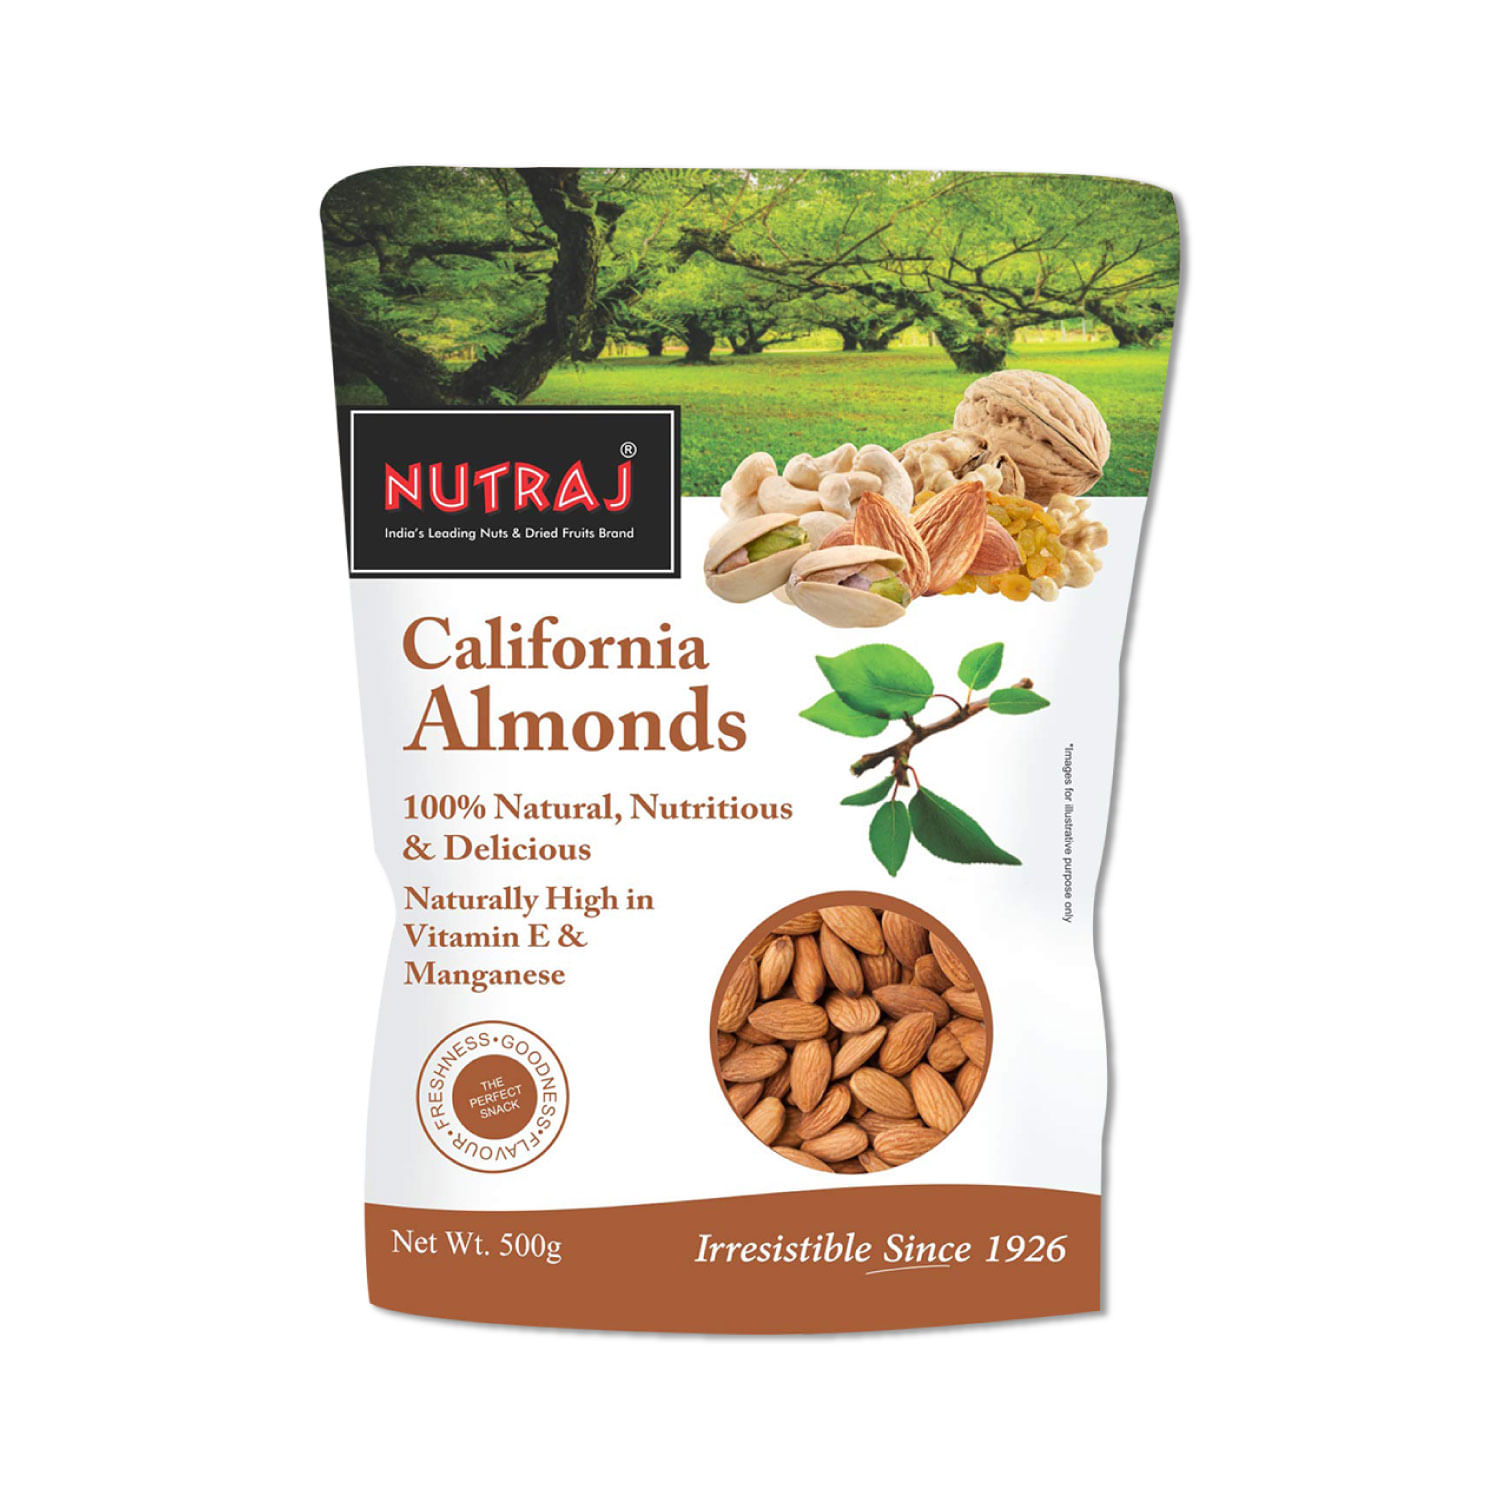 Nutraj Gold Arabian Dates (500g) and Nutraj California Almonds, (500g)